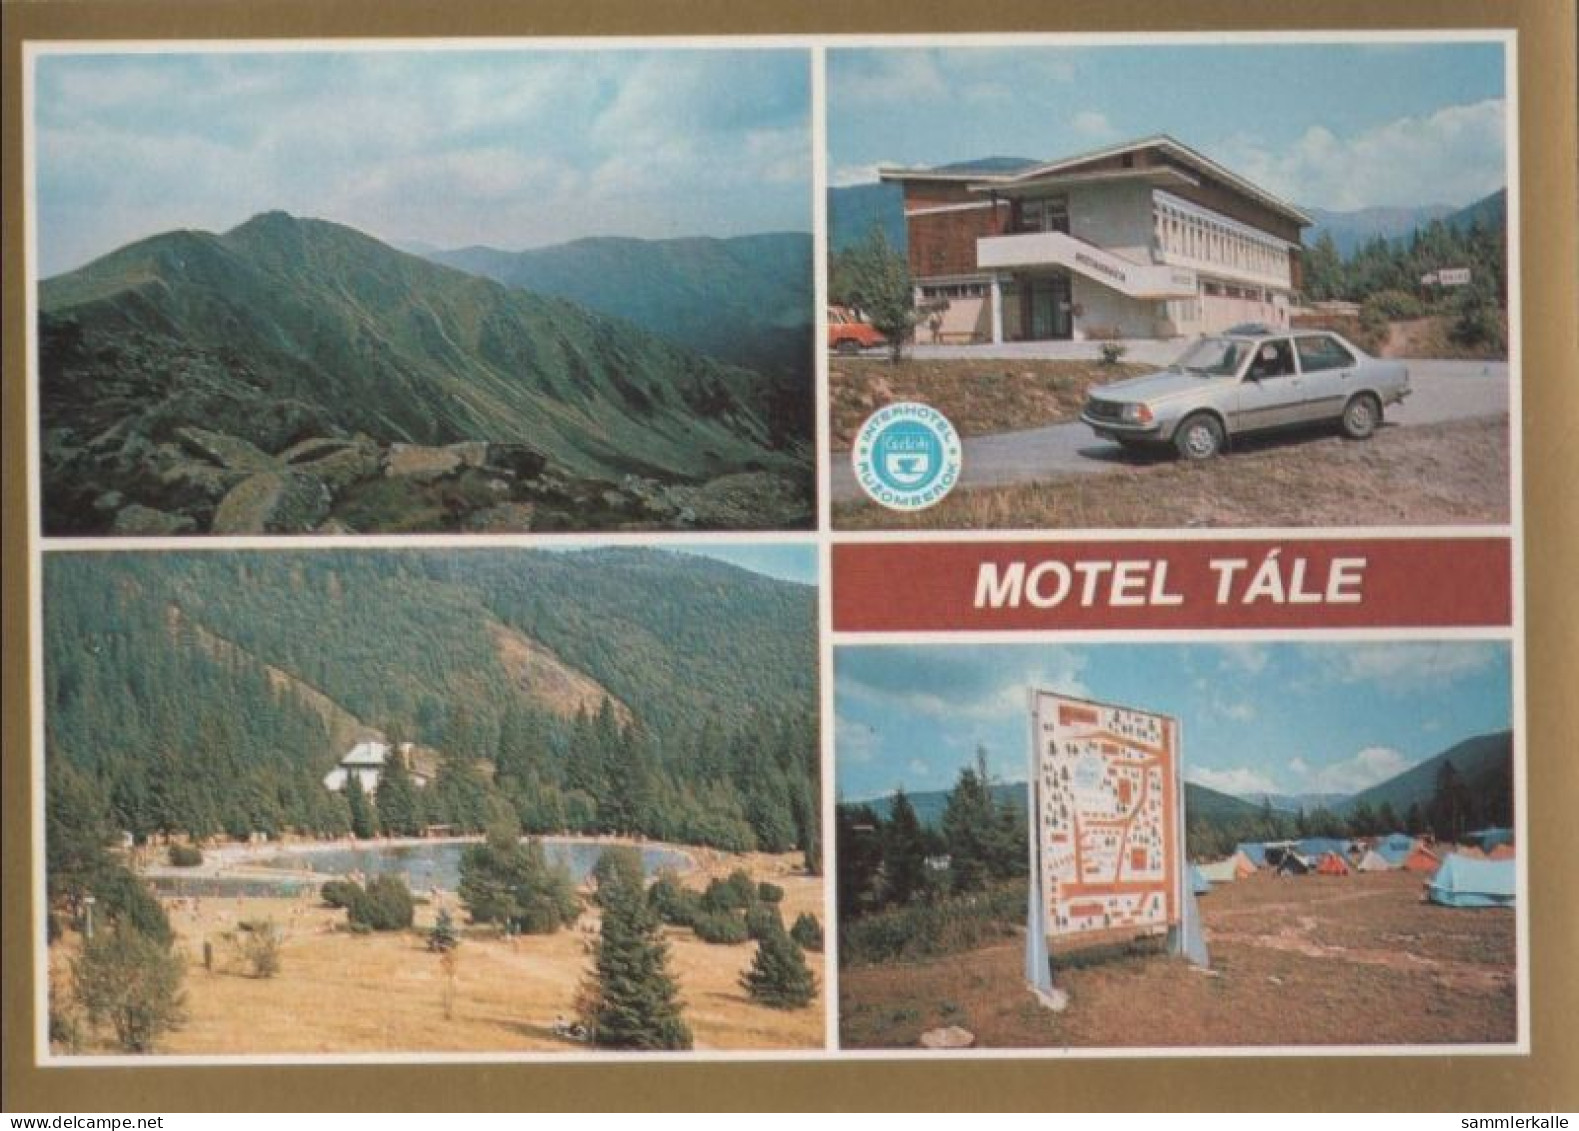 109579 - Nizke Tatry - Niedere Tatra - Tschechien - Motel Tale - Slowakei